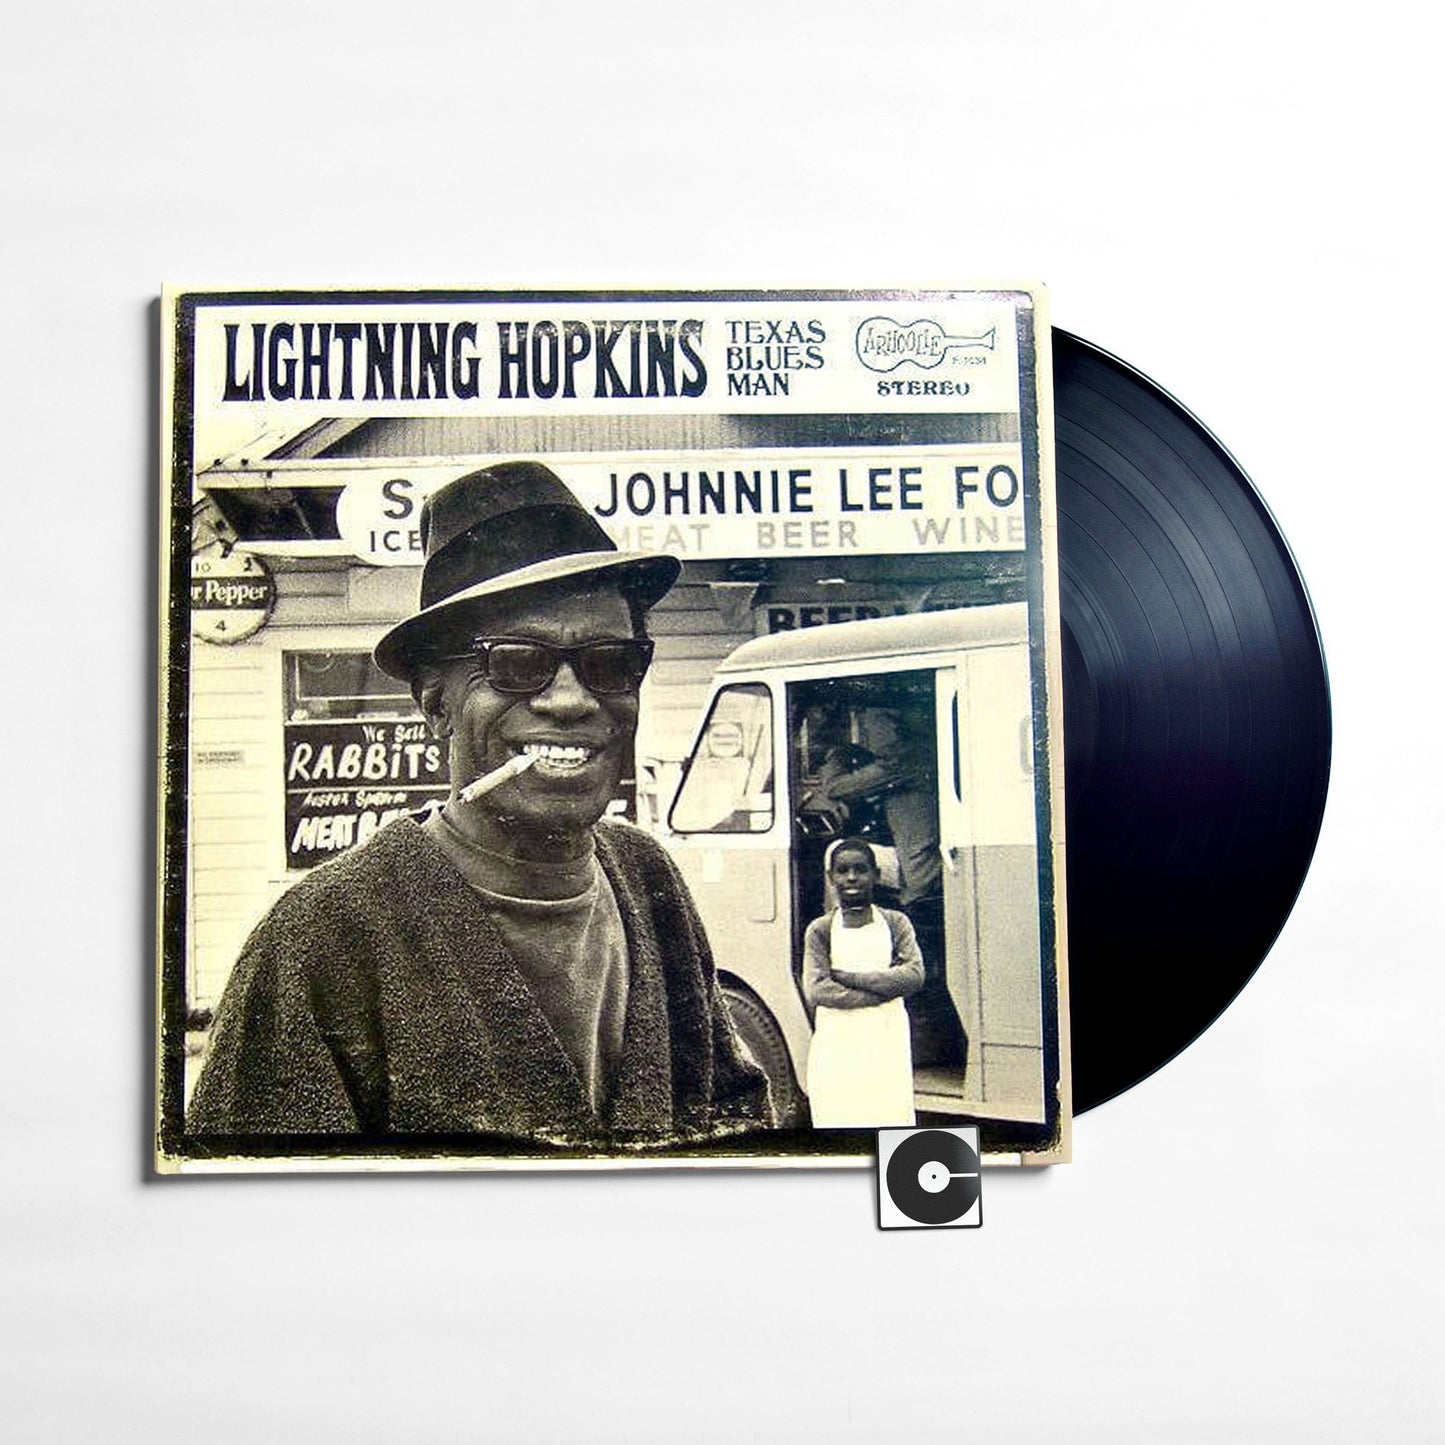 Lightning Hopkins - "Texas Blues Man"